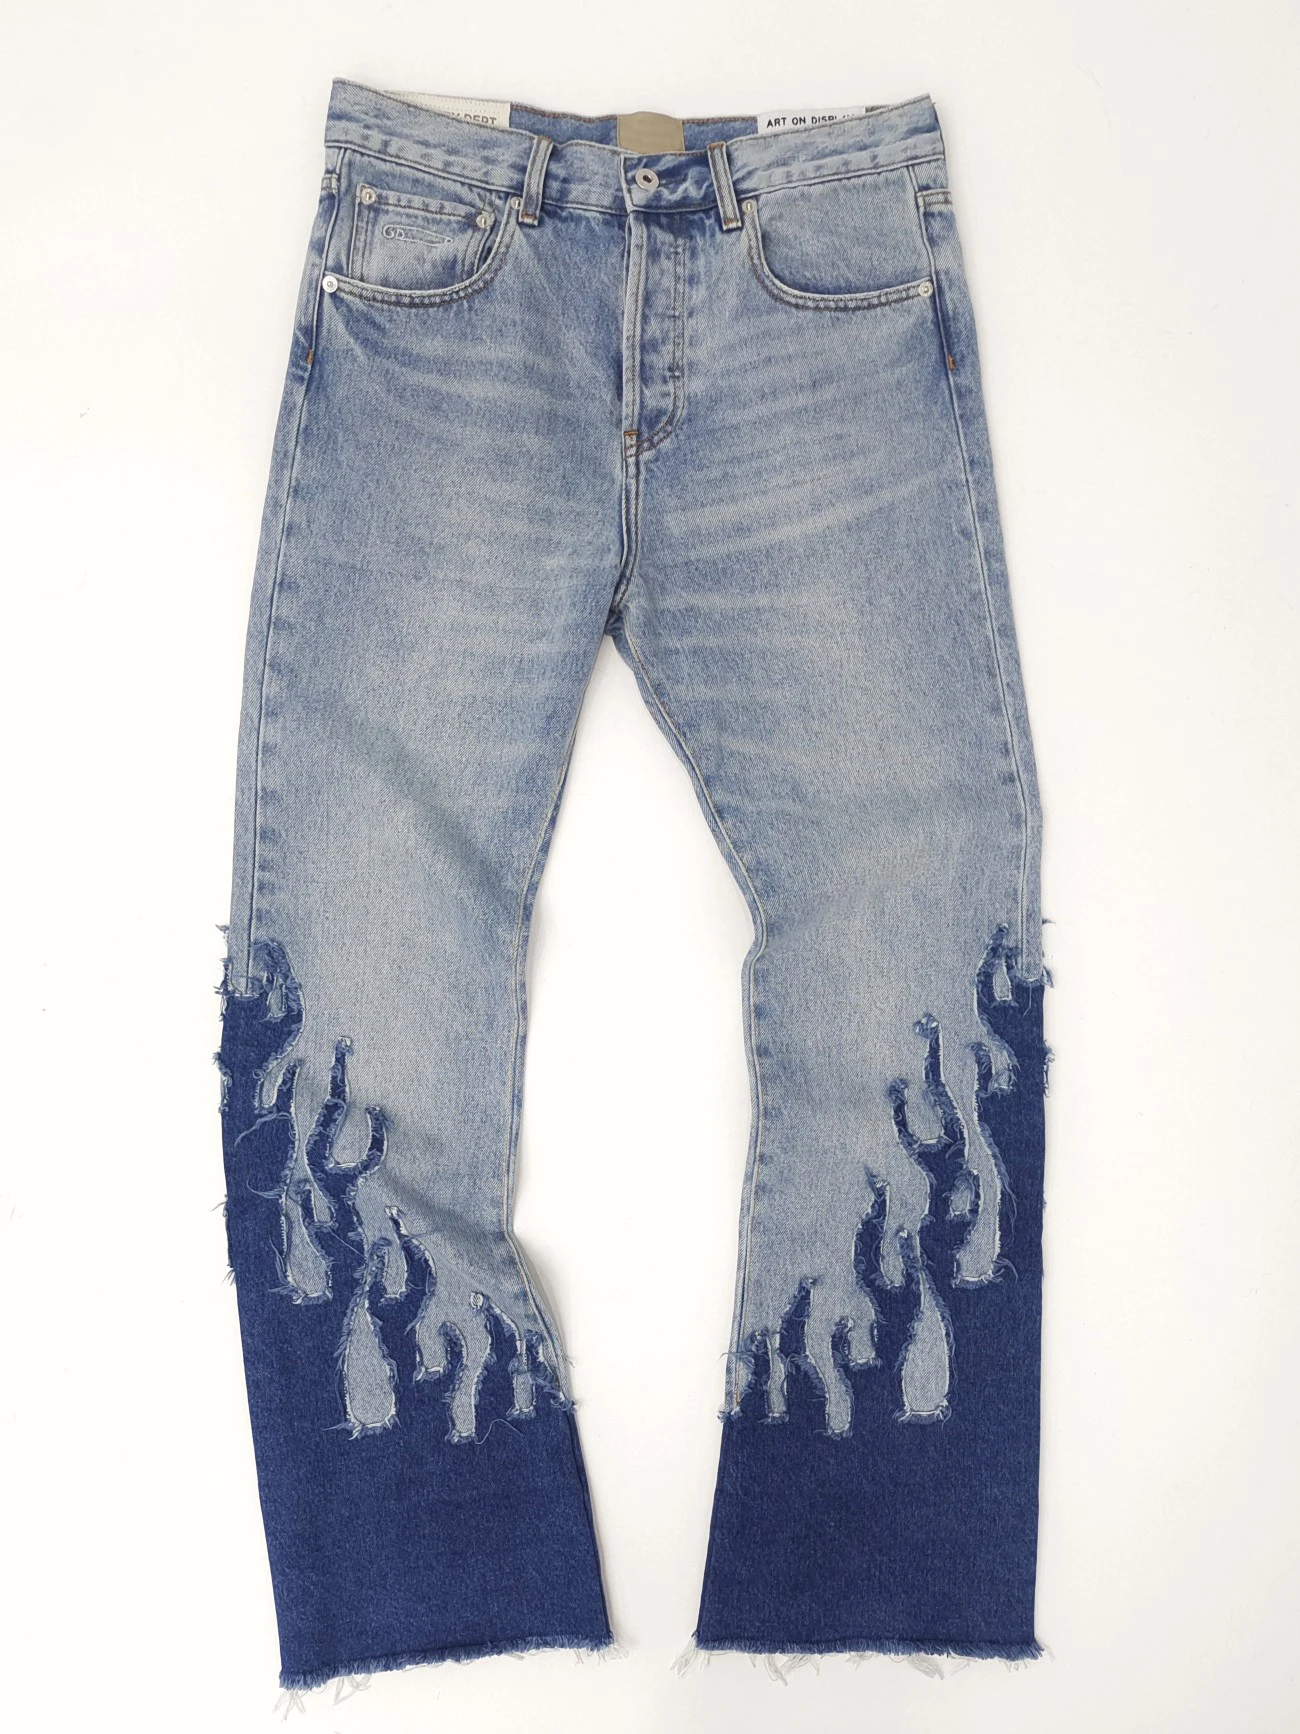 GD 9.0 Flame Micro Flared Jeans Men's Women's High Street Denim Long Pants High Quality Vintage Flame Leg Long Pants